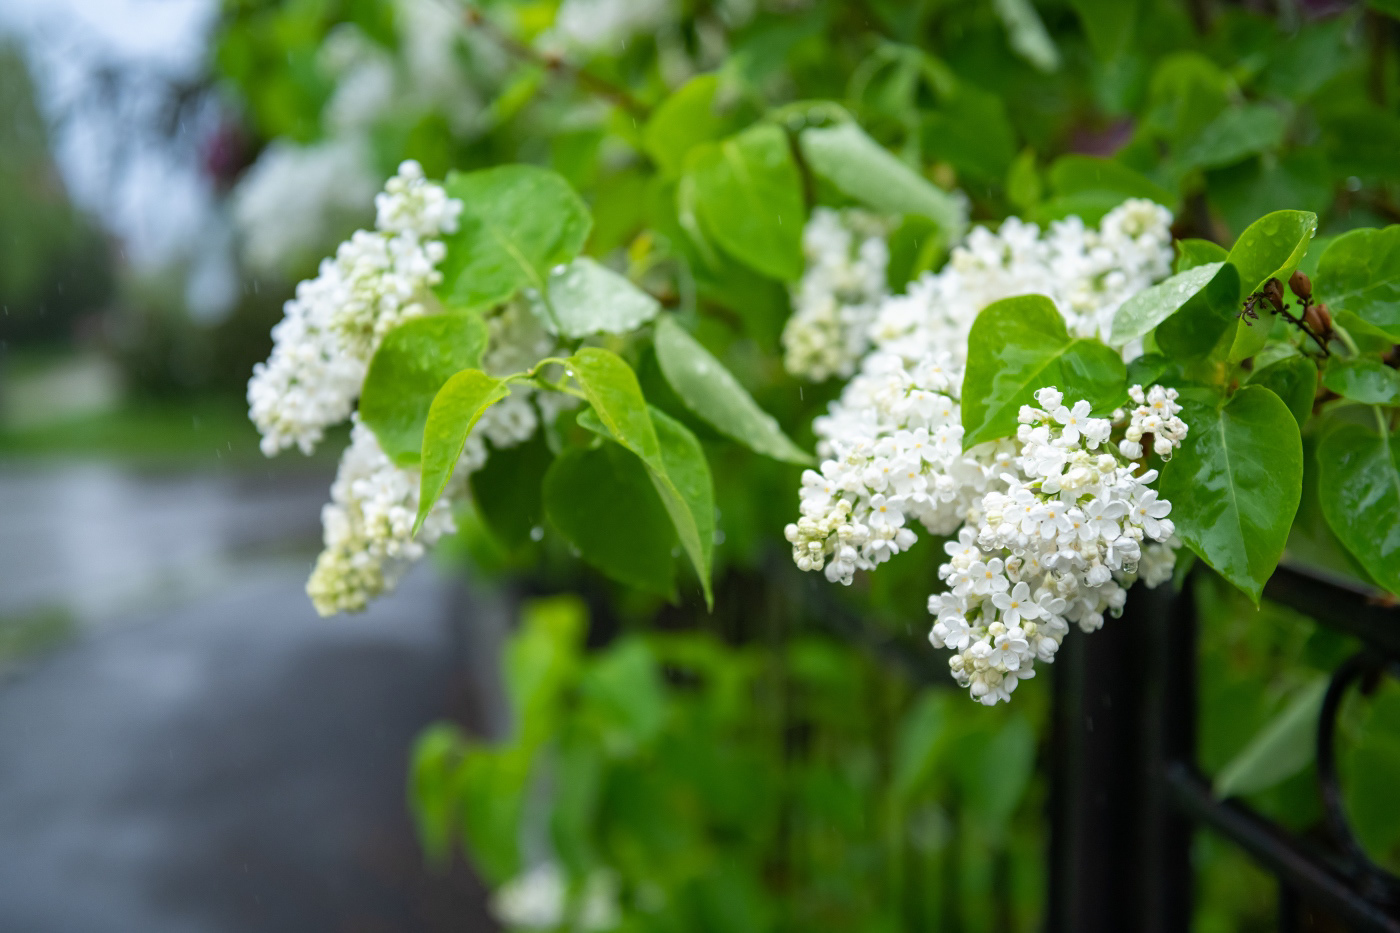 White syringa blossoms during the rainy day